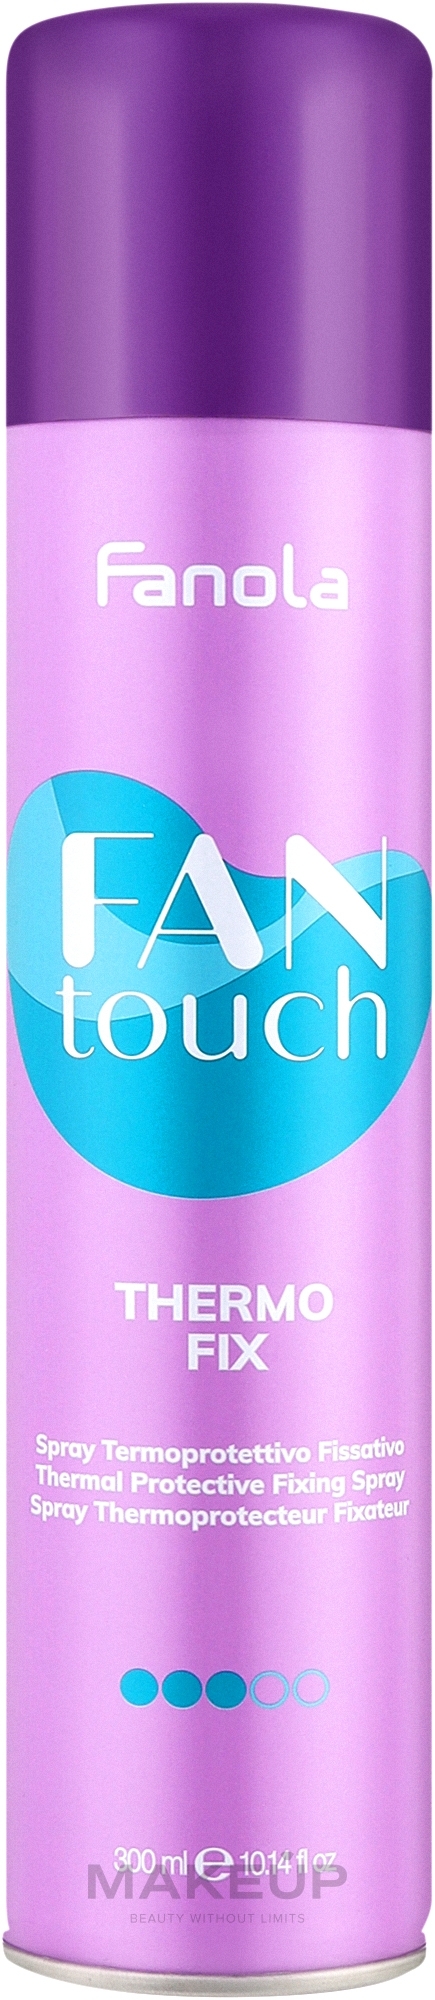 Фиксирующий термозащитный спрей для волос - Fanola Fantouch Thermo Fix Thermoprotective Fixing Spray — фото 300ml